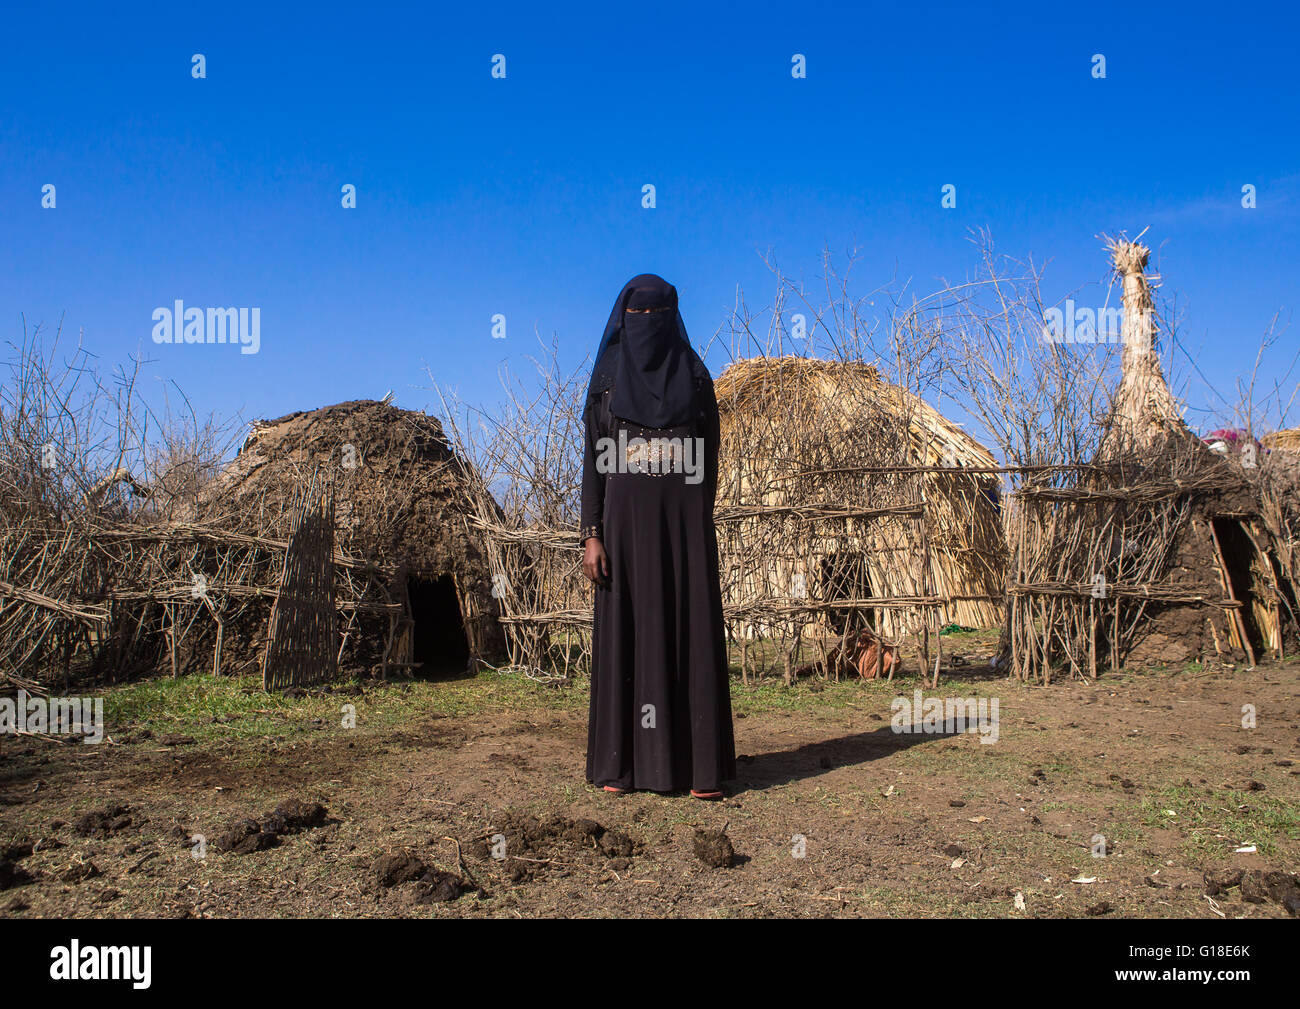 An ethiopian oromo woman dressed in black burqa stands in front of her hut, Amhara region, Artuma, Ethiopia Stock Photo